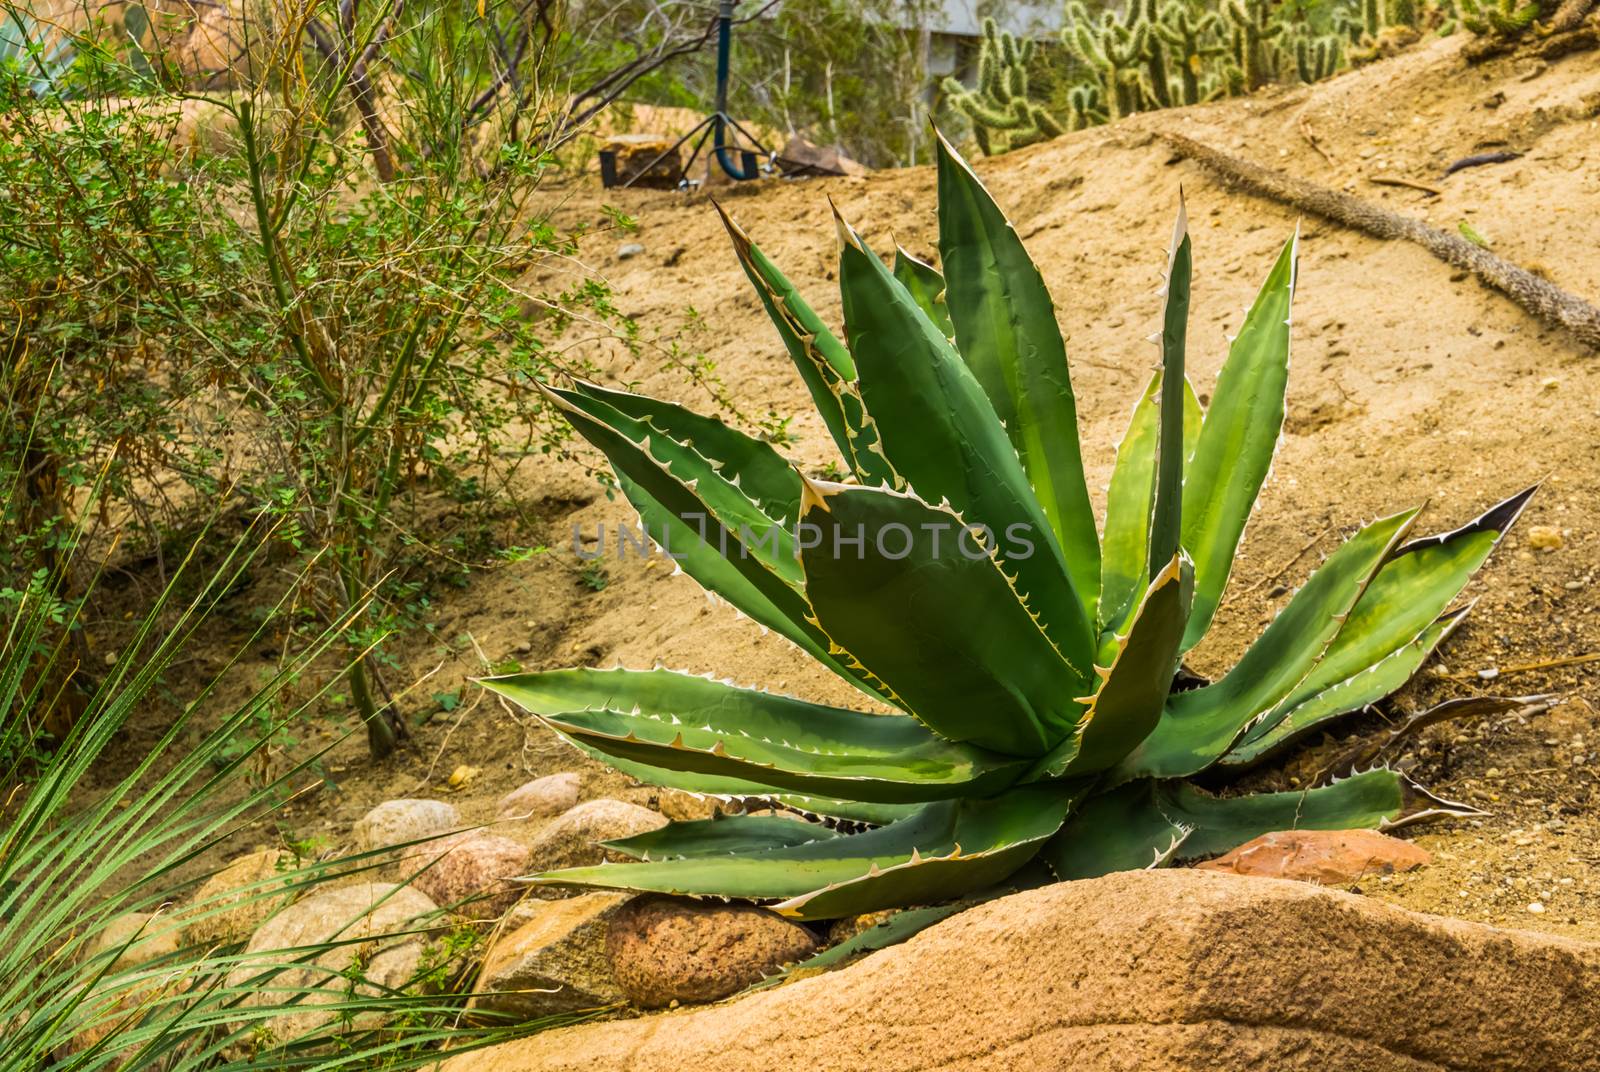 green sentry plant in a desert scenery, popular tropical plant specie from America by charlottebleijenberg